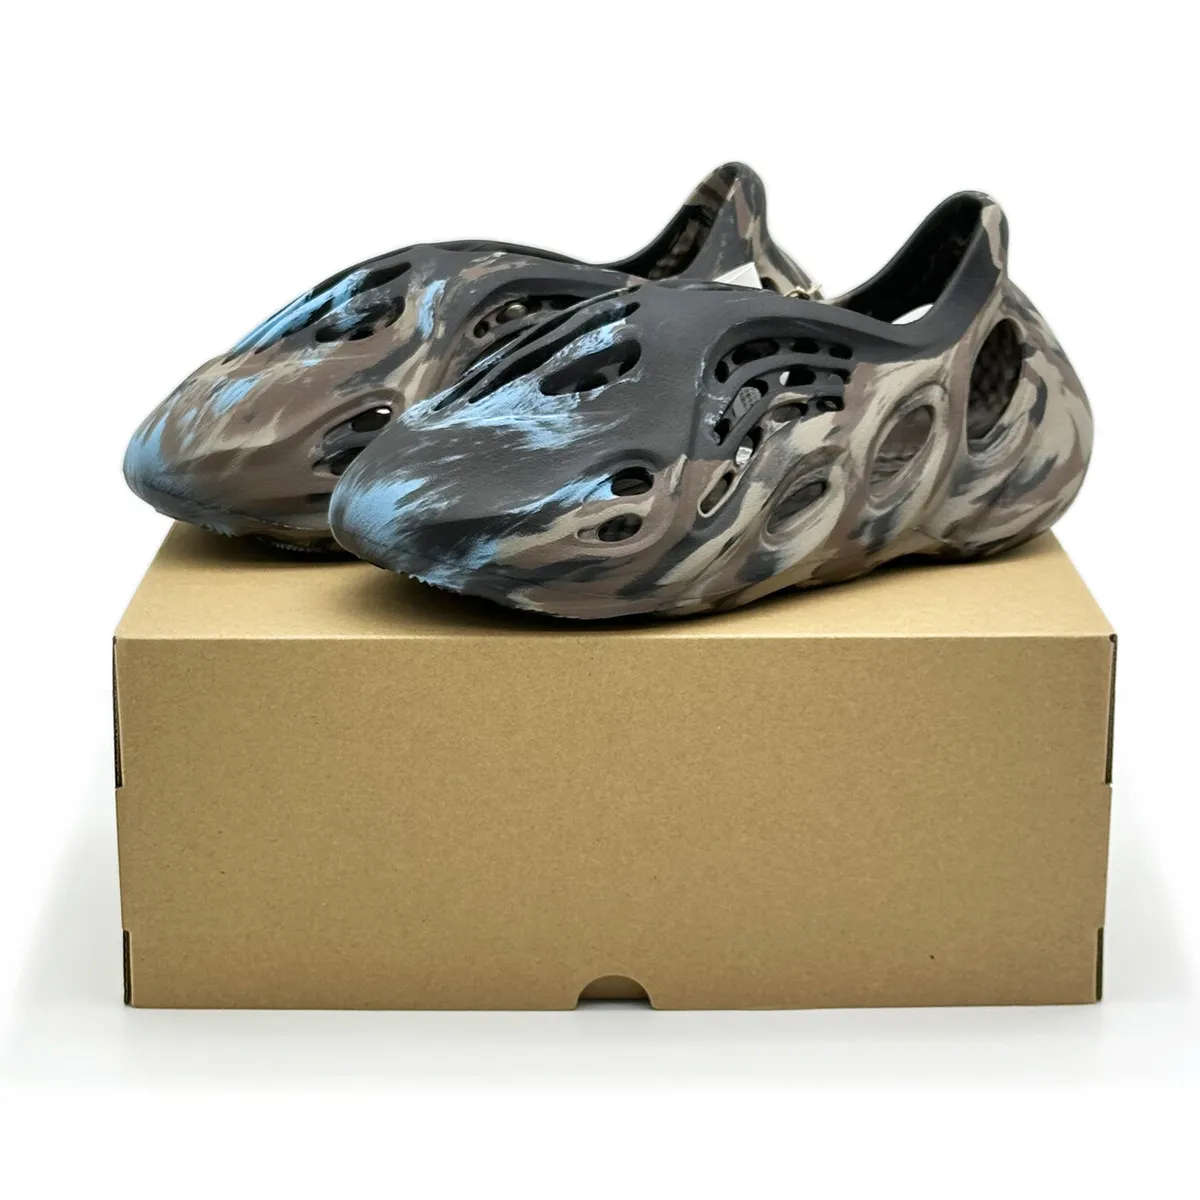 ID4126 adidas Yeezy Foam Runner MX Cinder (Men's) | eBay